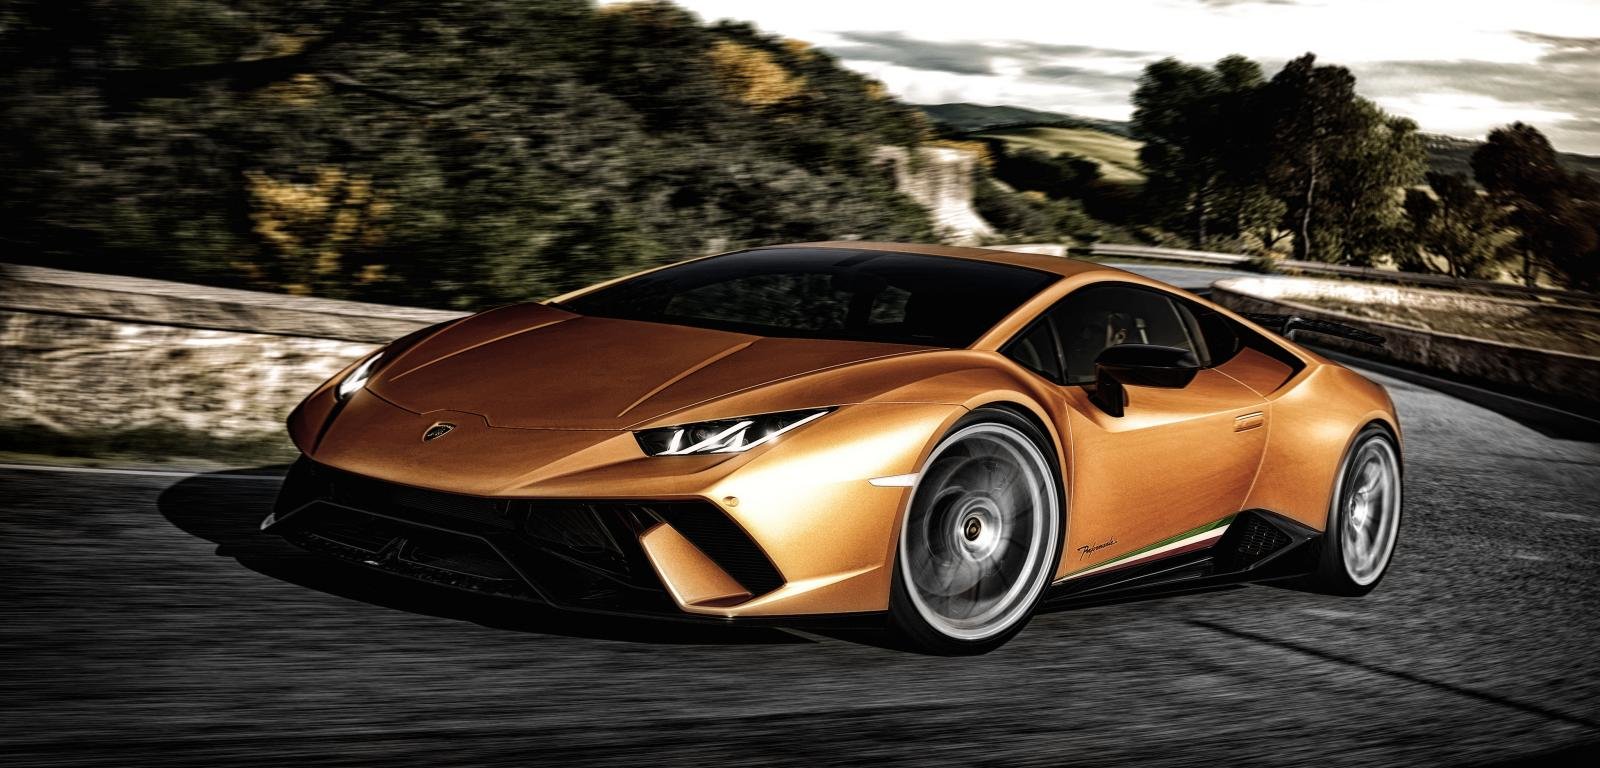 Lamborghini Huracan wallpapers HD for desktop backgrounds